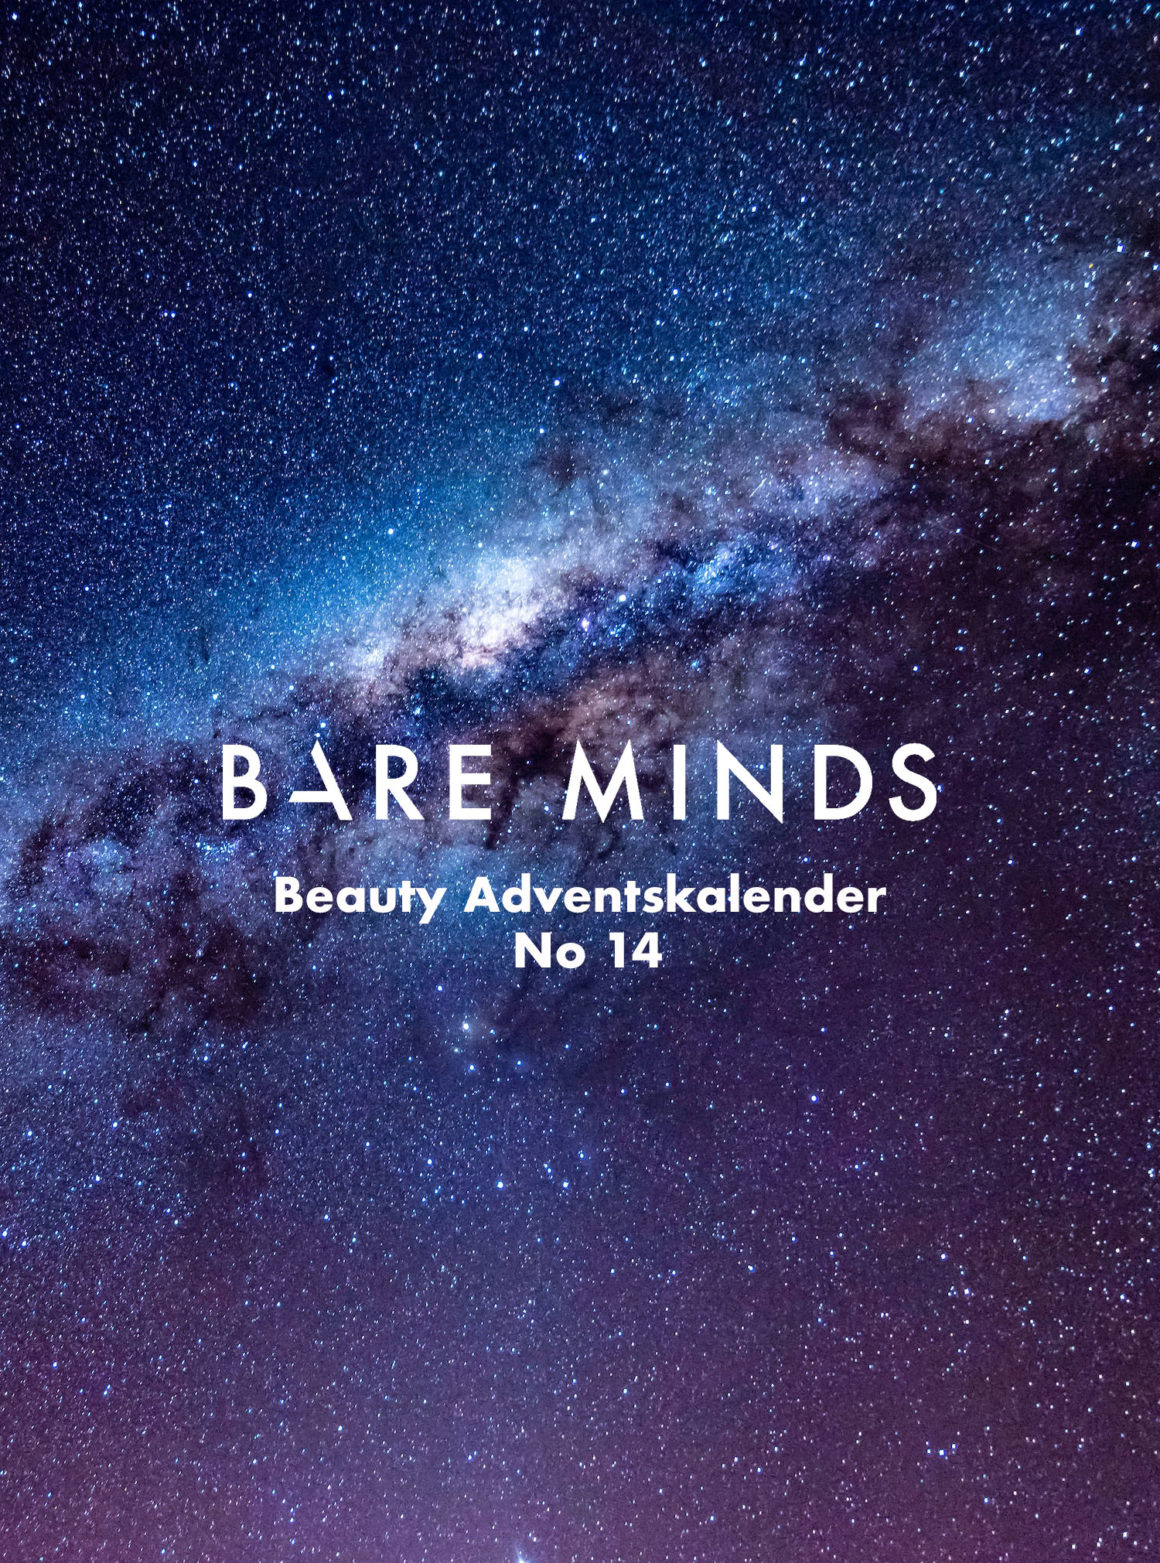 Bare Minds Beauty Adventskalender graham-holtshausen-1080902-unsplash Kopie